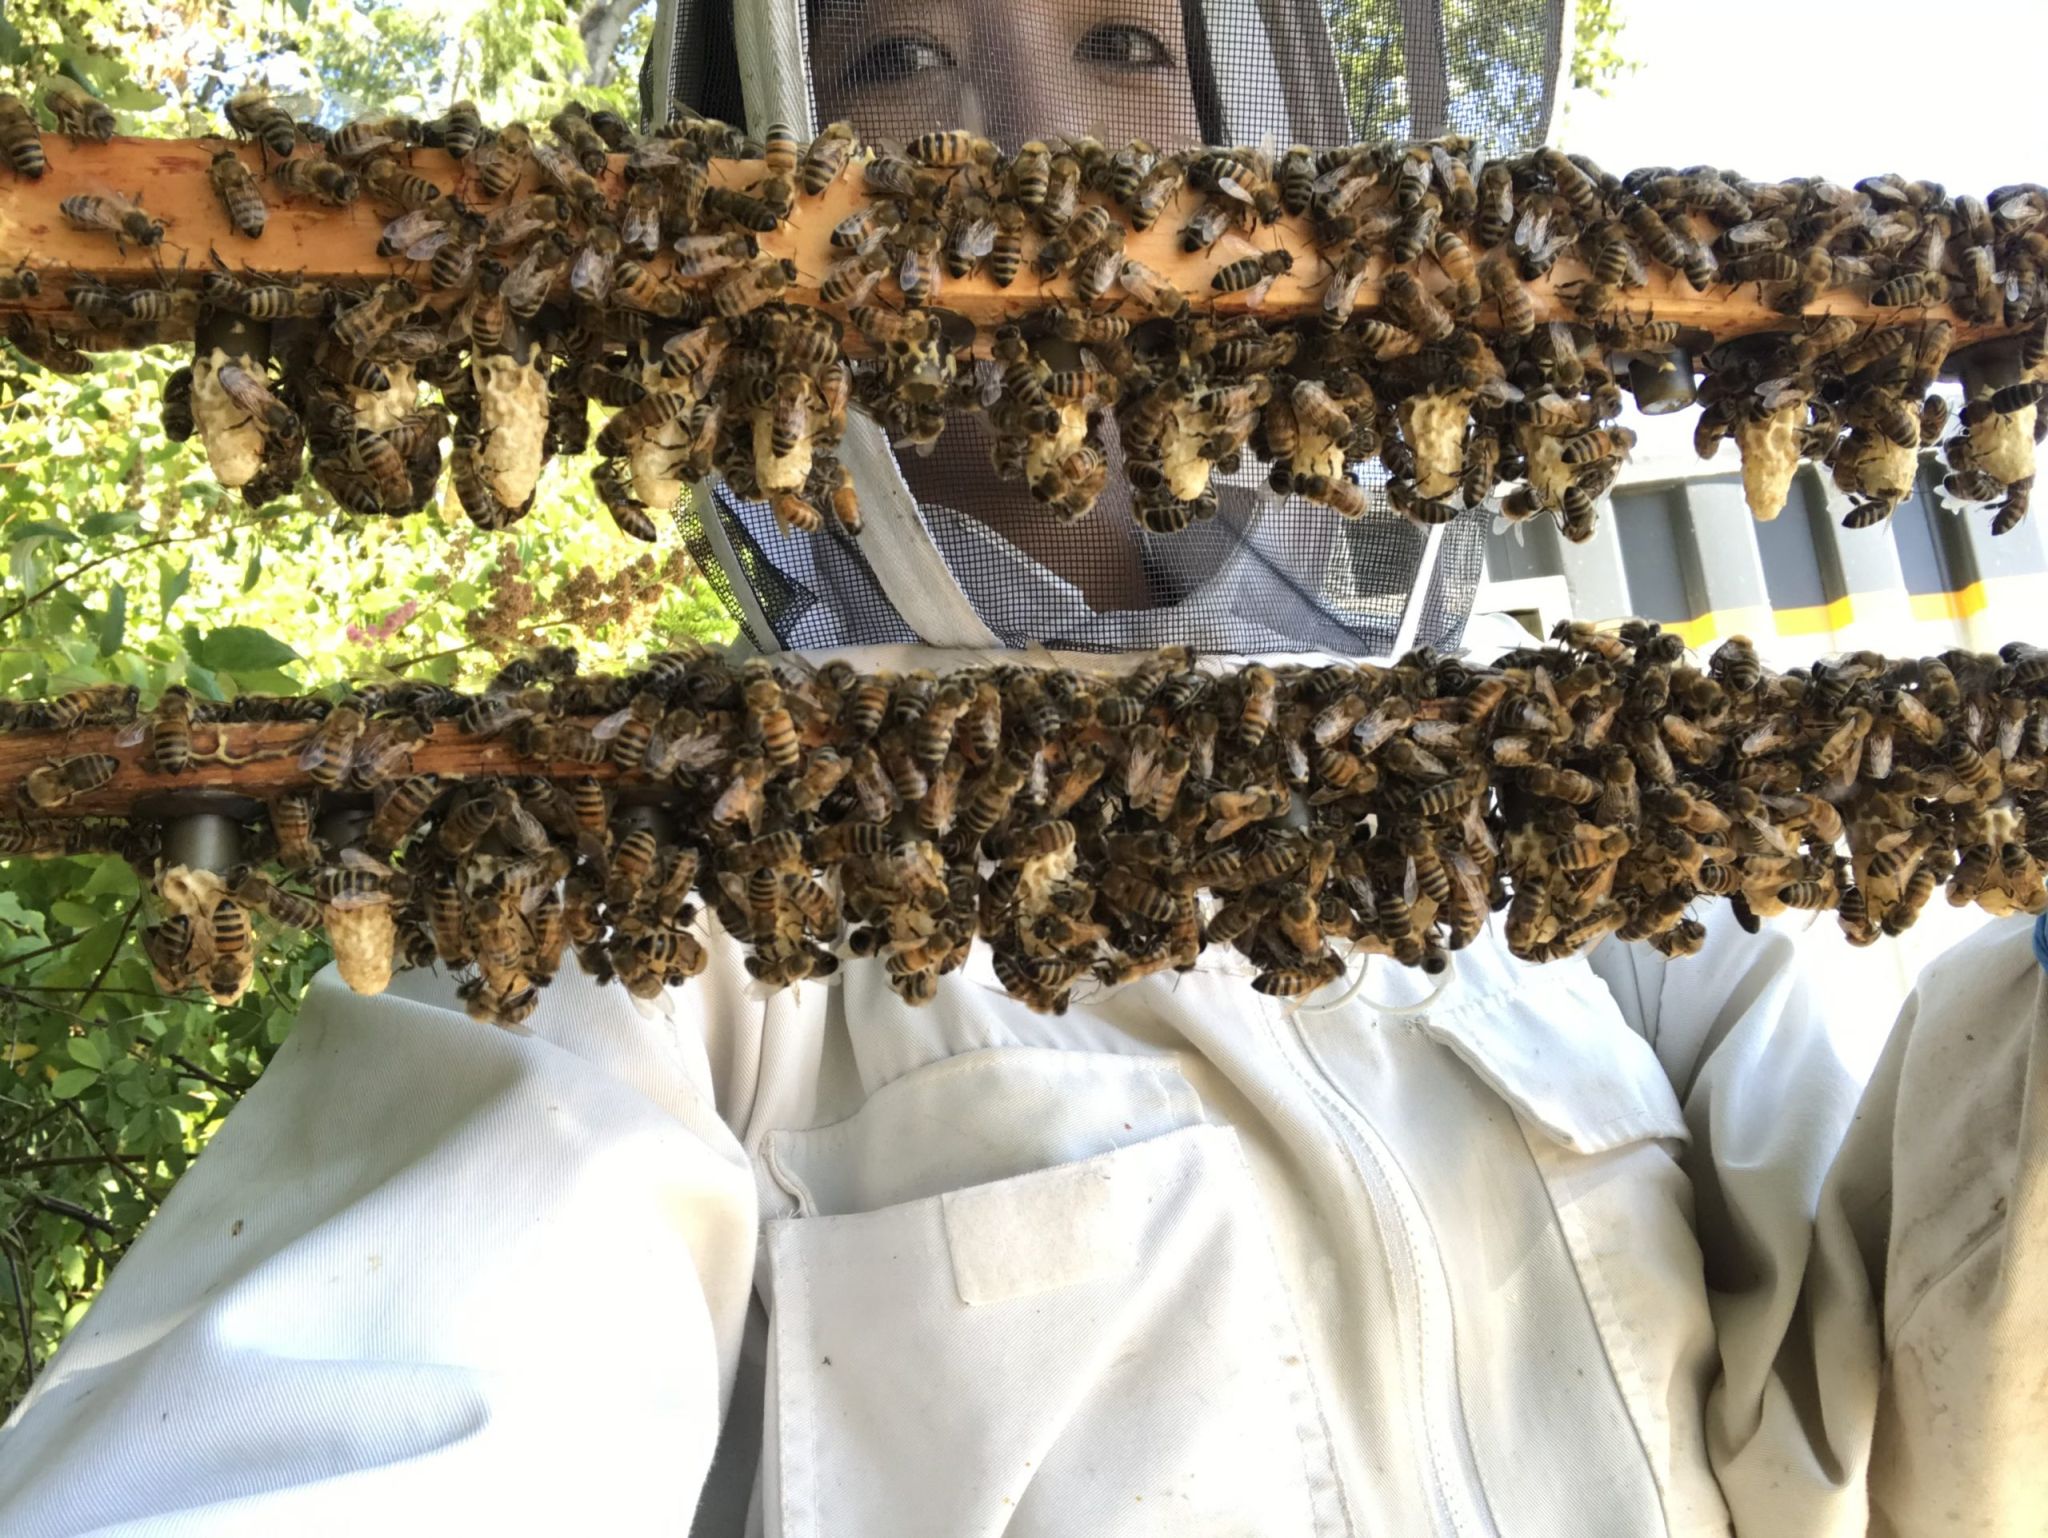 The life of a queen bee – Just Bee Honey